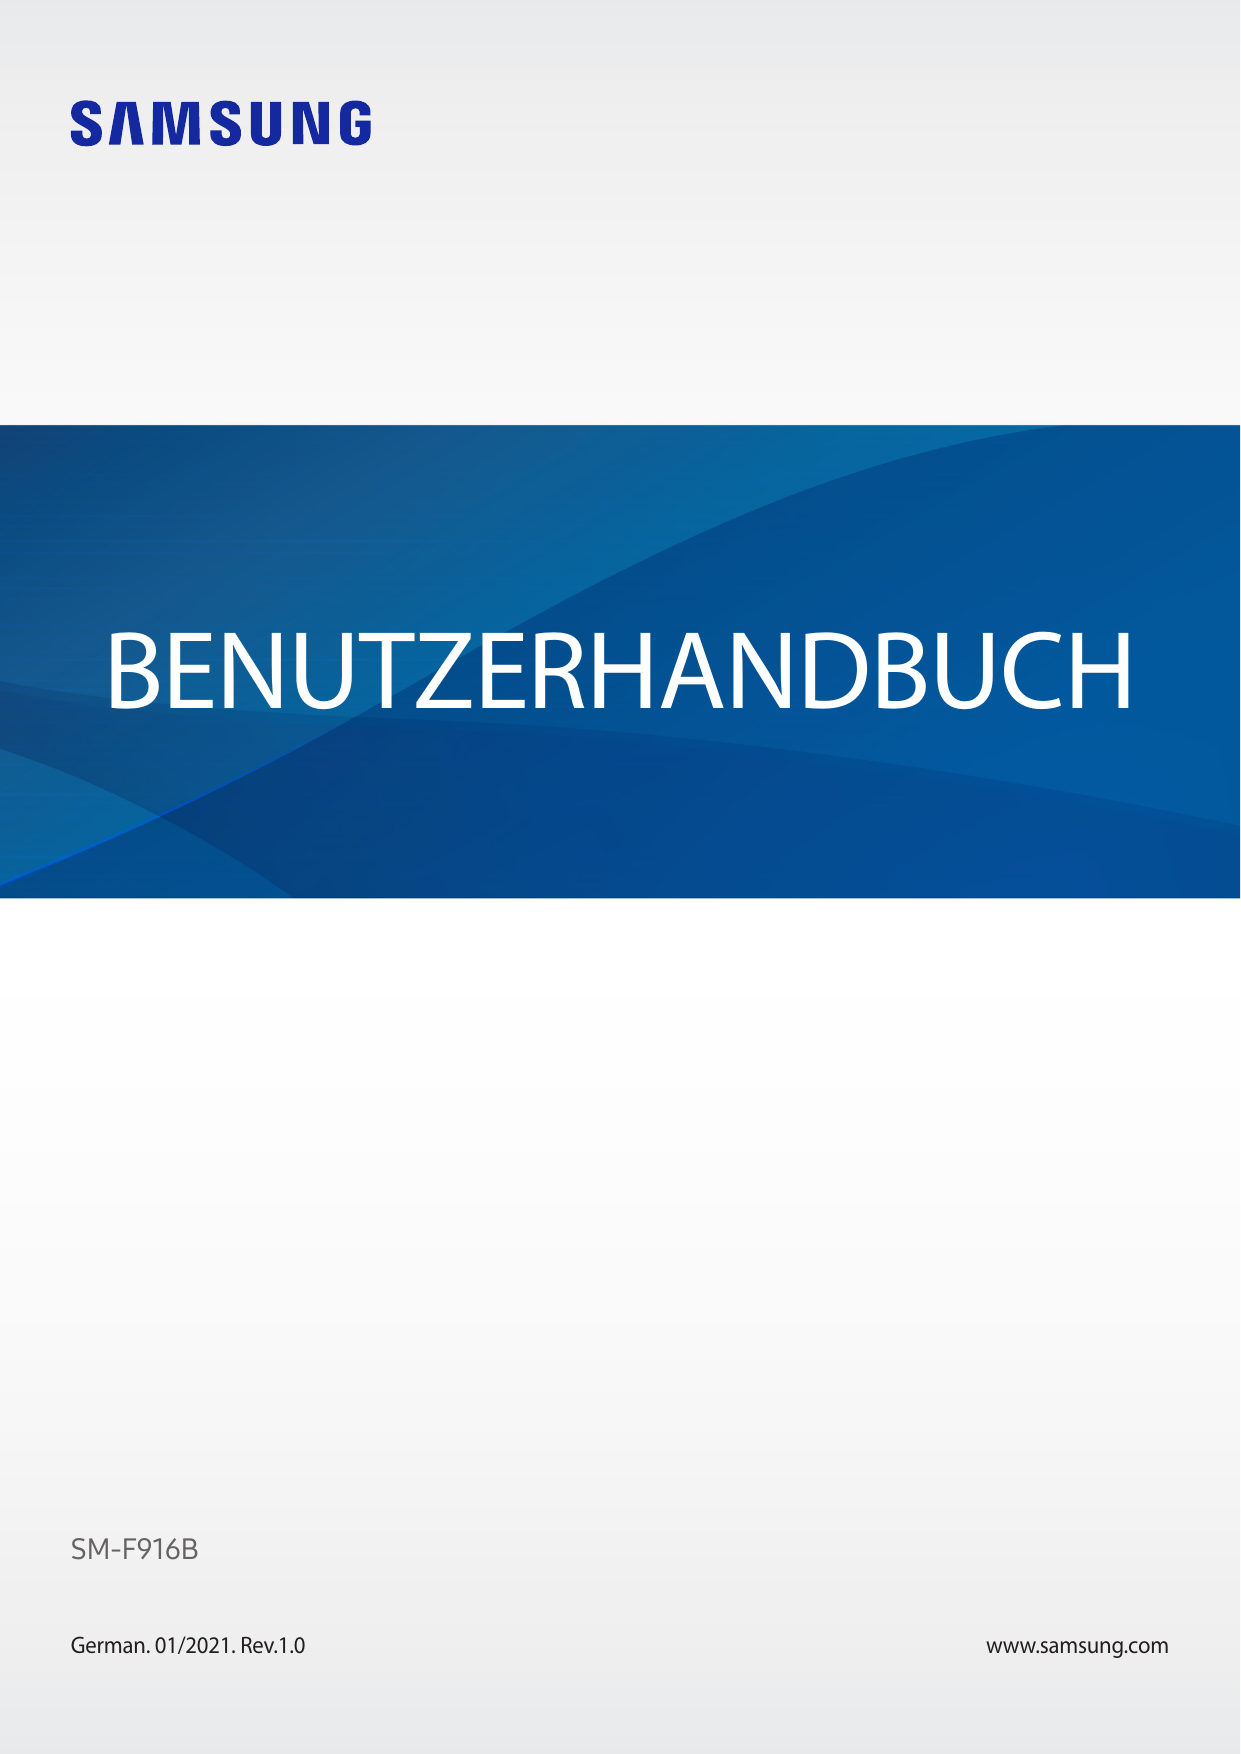 BENUTZERHANDBUCHSM-F916BGerman. 01/2021. Rev.1.0www.samsung.com